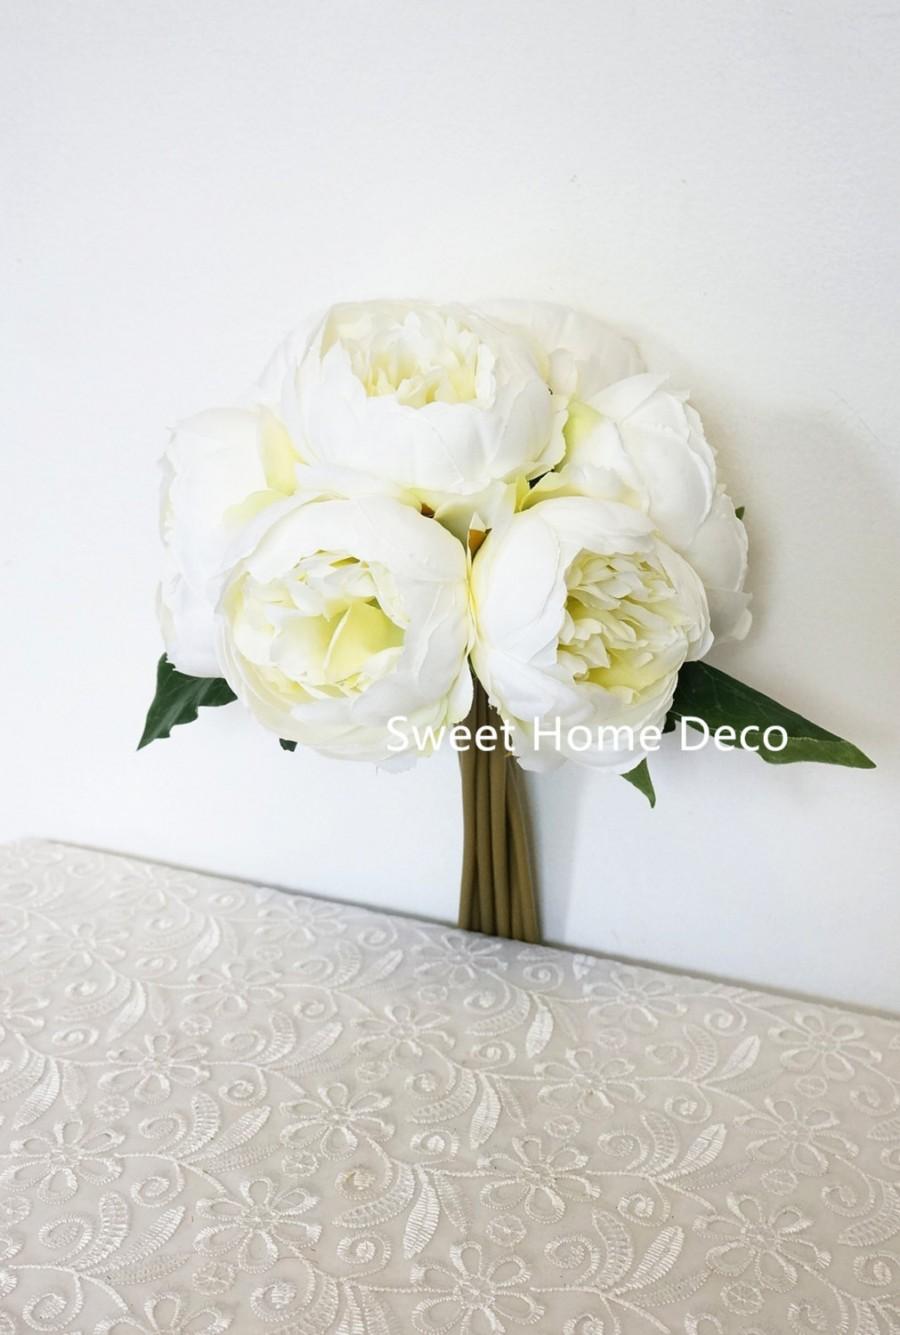 Wedding - JennysFloweShop 11'' Silk Peony Artificial Flower Bouquet Wedding/Home Decorations (10 Stems/7 Flower Heads) White/Green